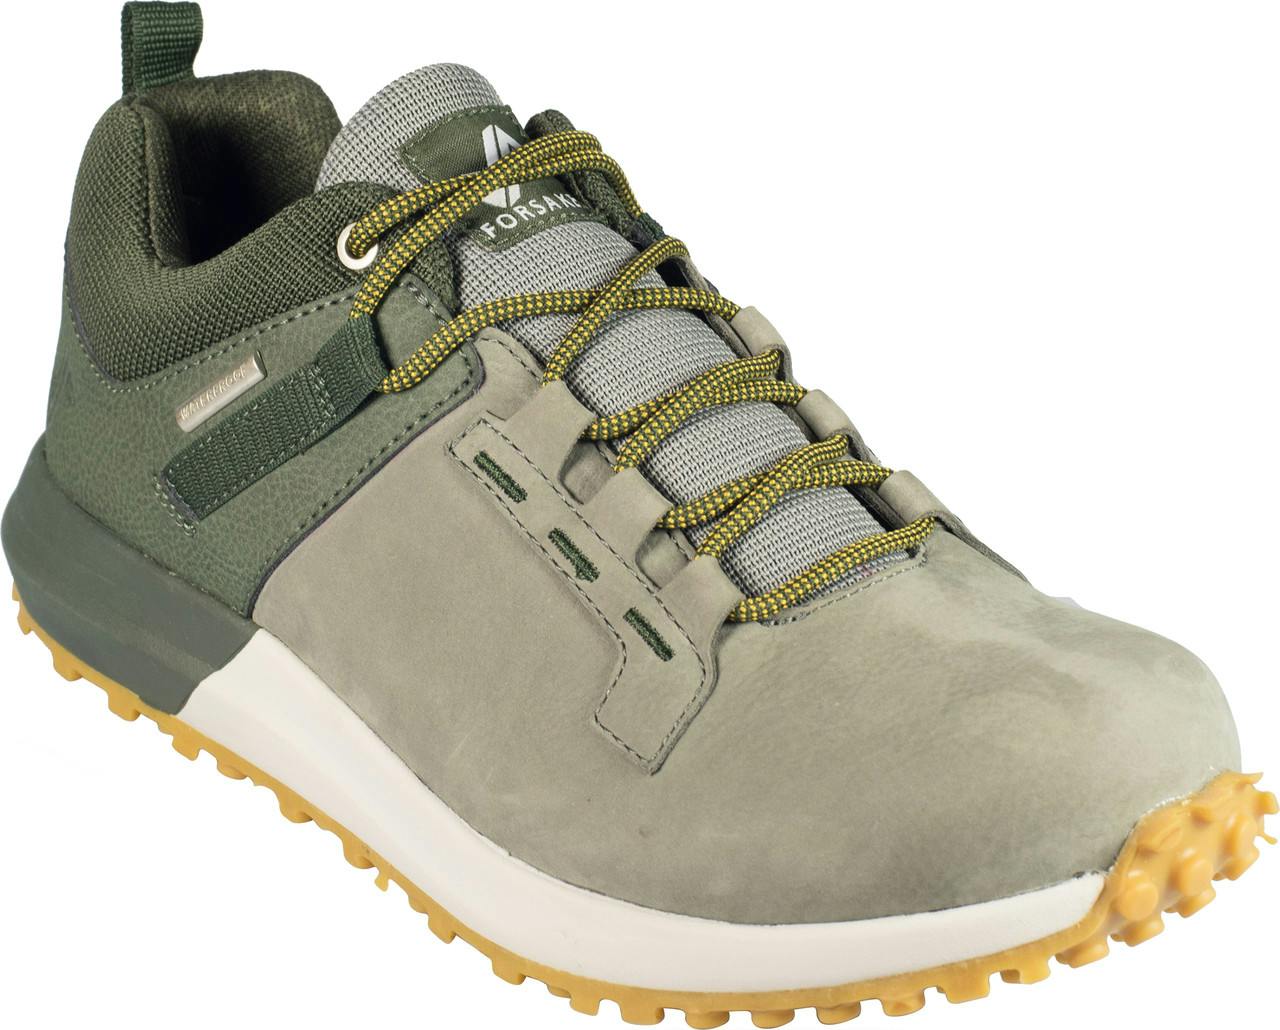 Range Low Waterproof Trail Shoes Olive/Grey